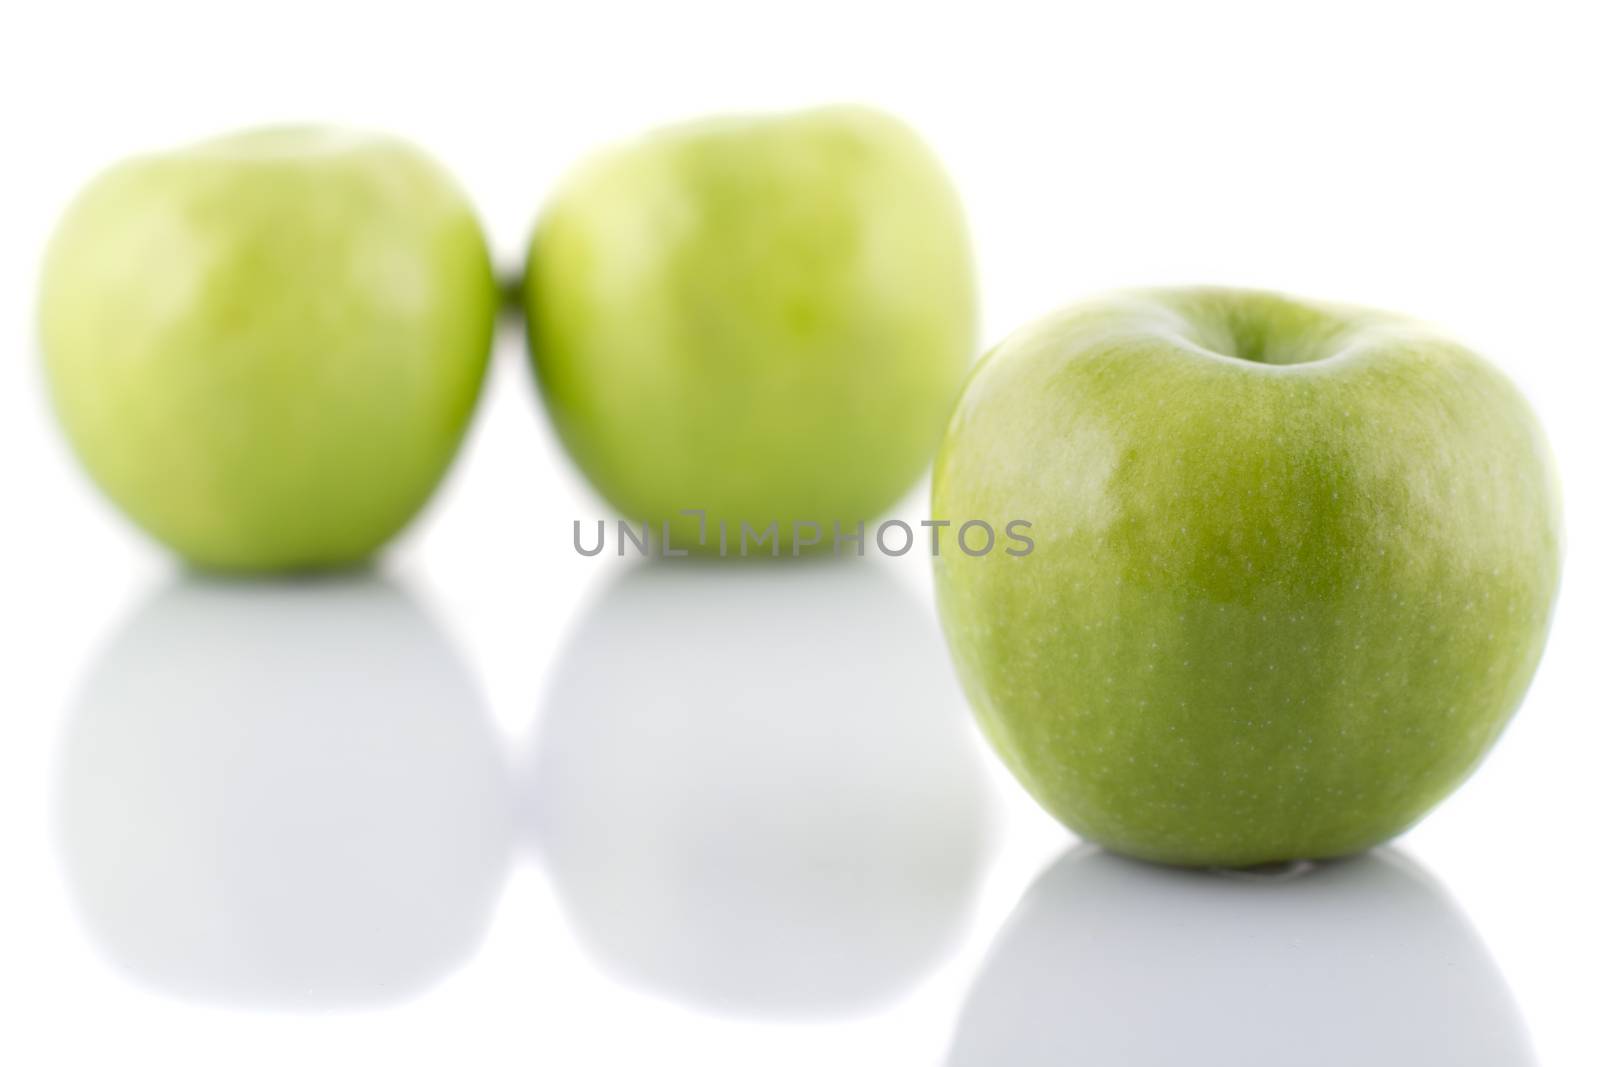 Juicy green apple by baronvsp